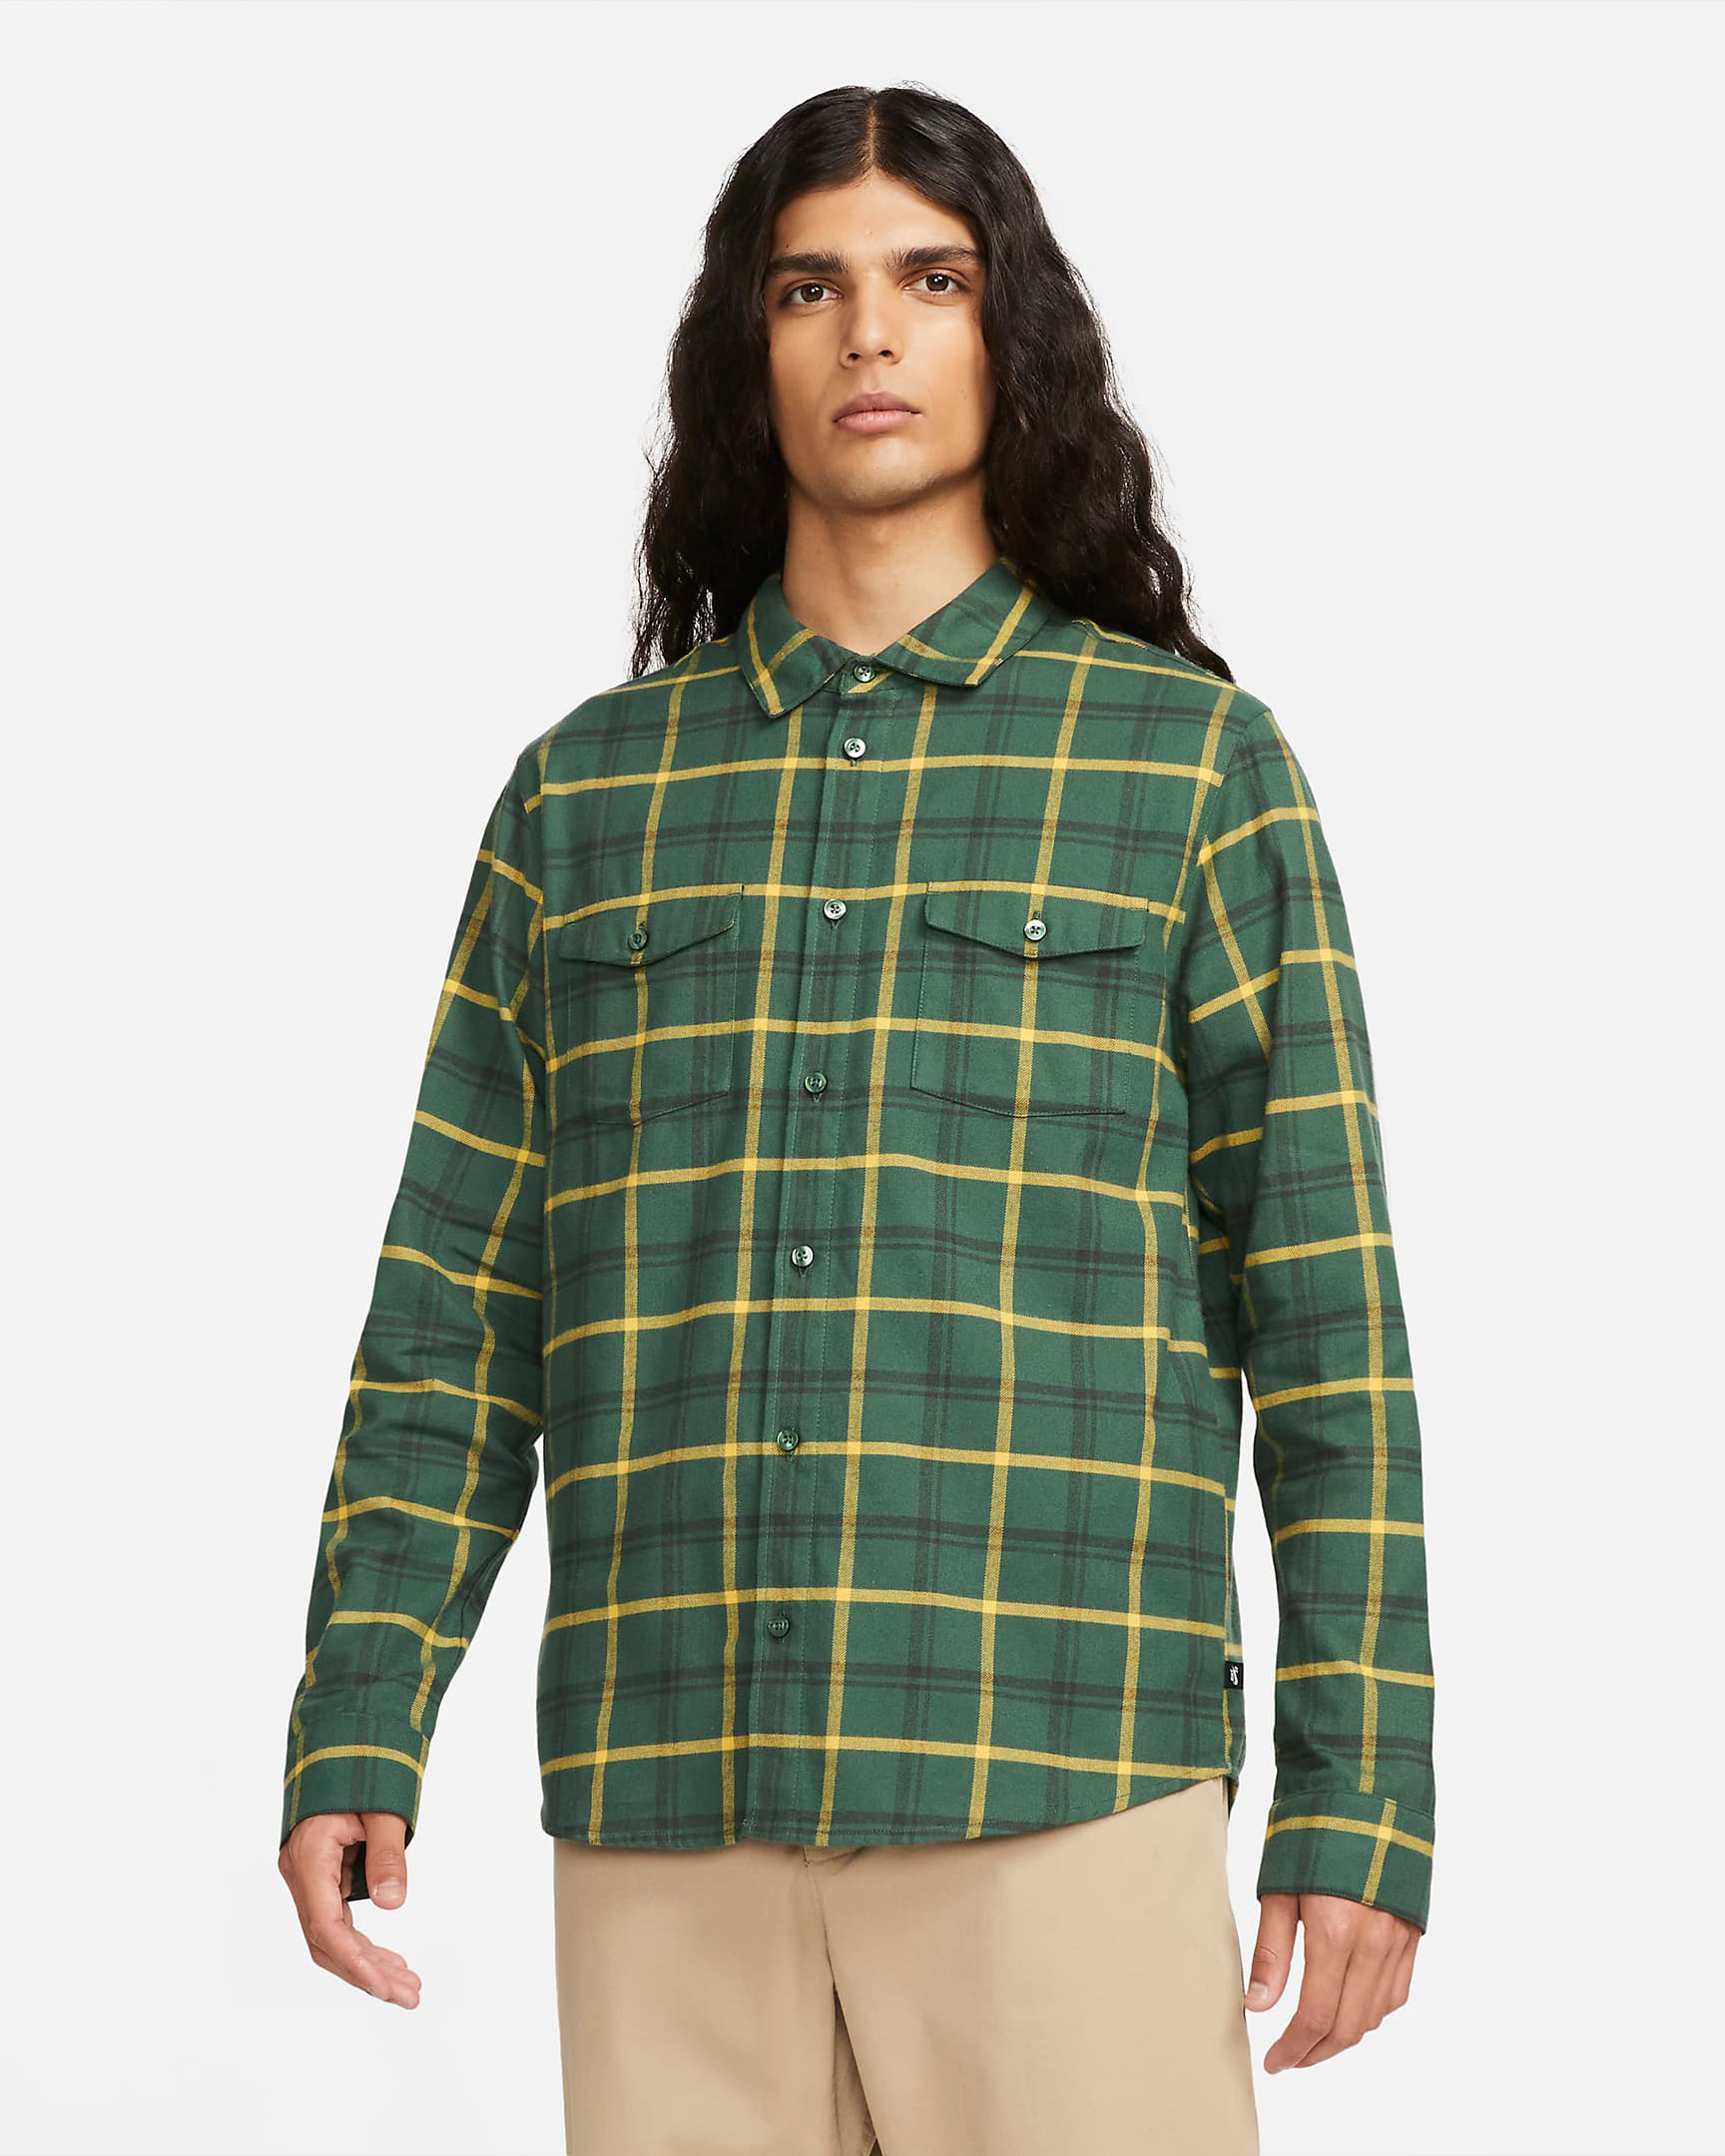 nike-sb-skate-flannel-shirt-noble-green-pollen-1